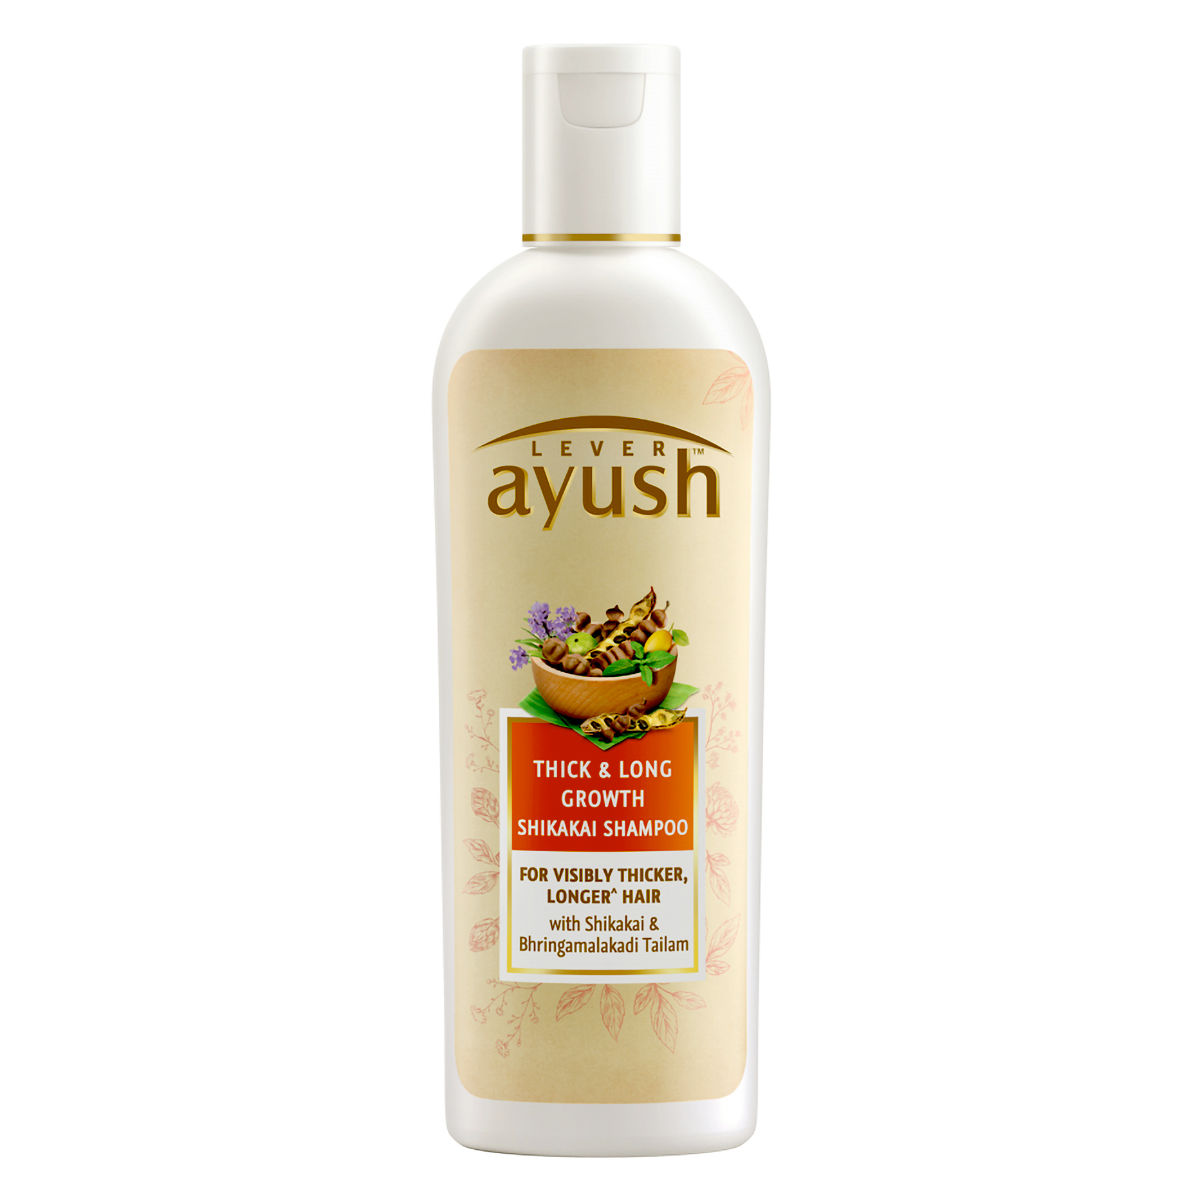 Buy Lever Ayush Thick & Long Growth Shikakai Shampoo, 175 ml Online